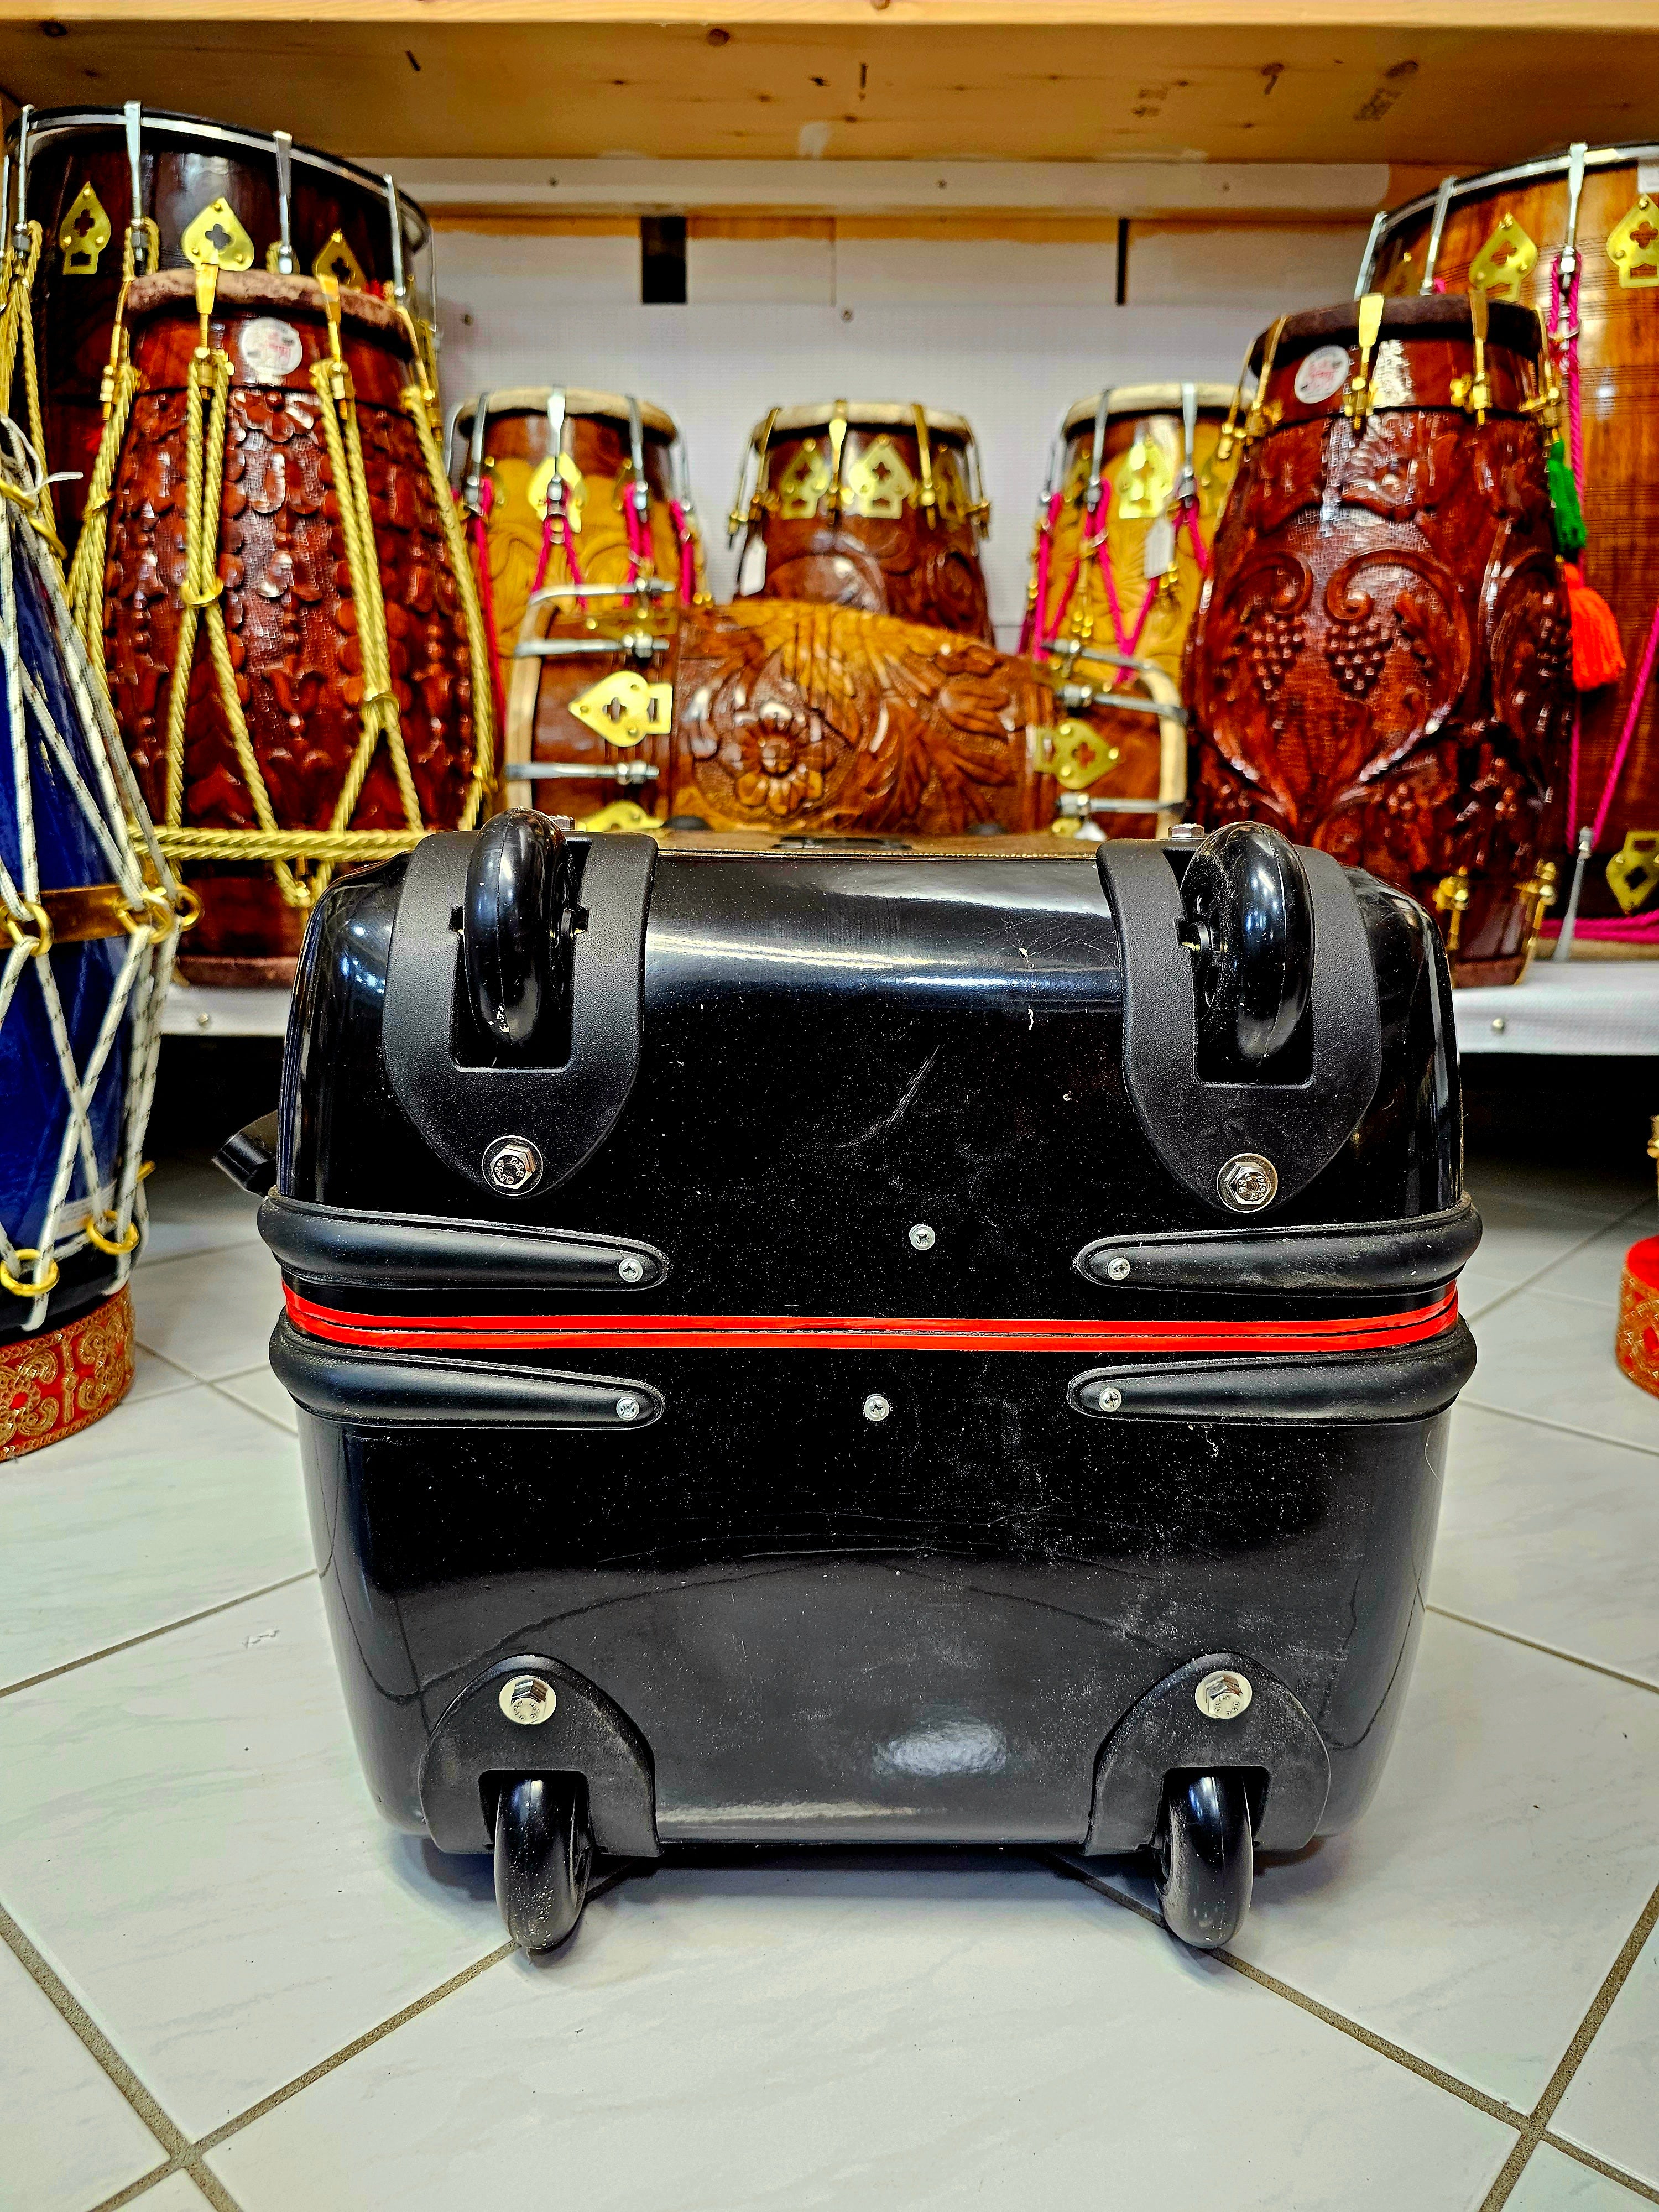 Rhythmic Roamer Tabla/Dholak Traveler - A Black Hard Travel Case with Handle, Wheels, and Rich Red Felt Interior!